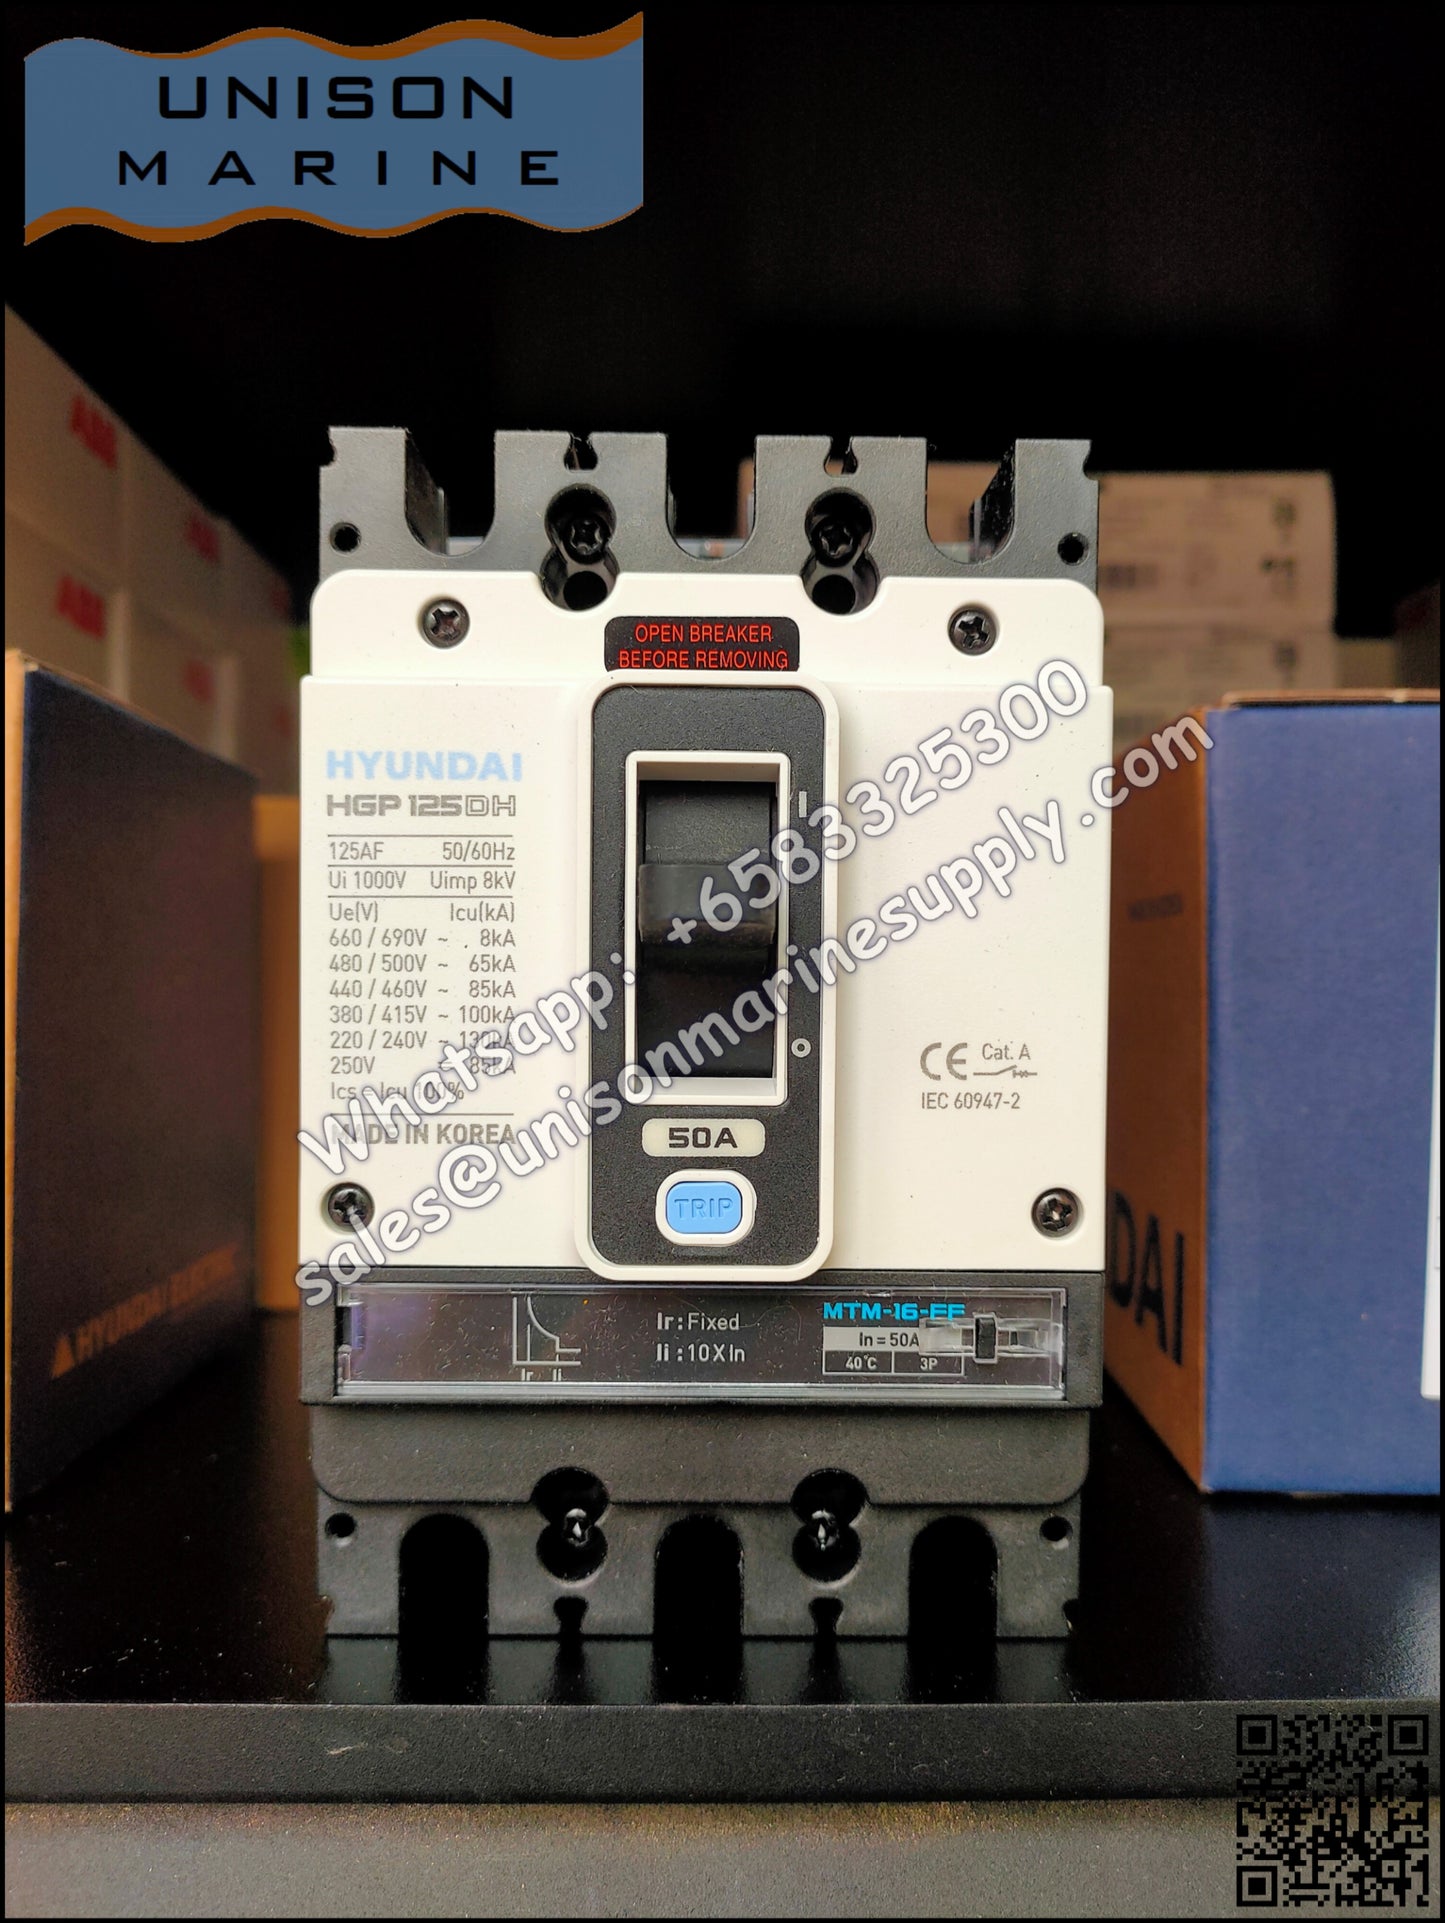 Hyundai Marine Circuit Breaker (MCCB) - HGP125DH 3P Fixed / Plug-in Type